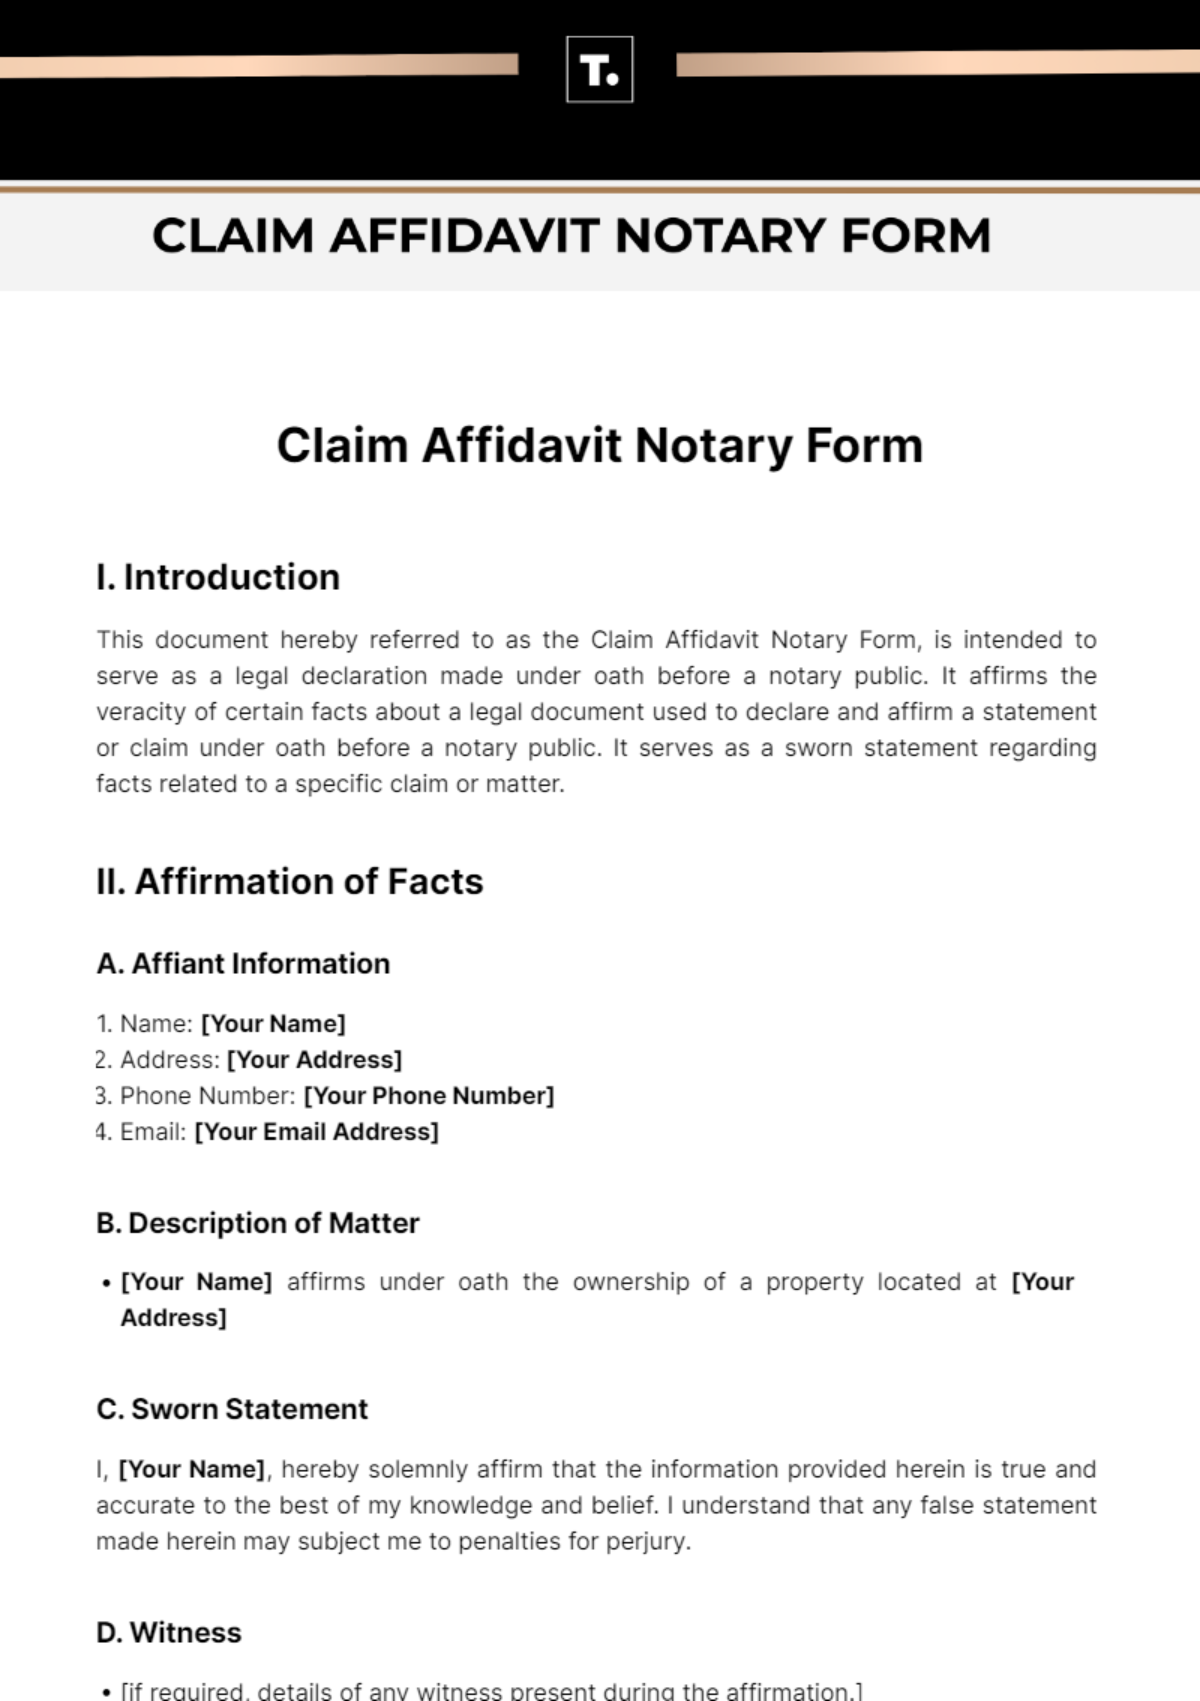 Free Claim Affidavit Notary Form Template